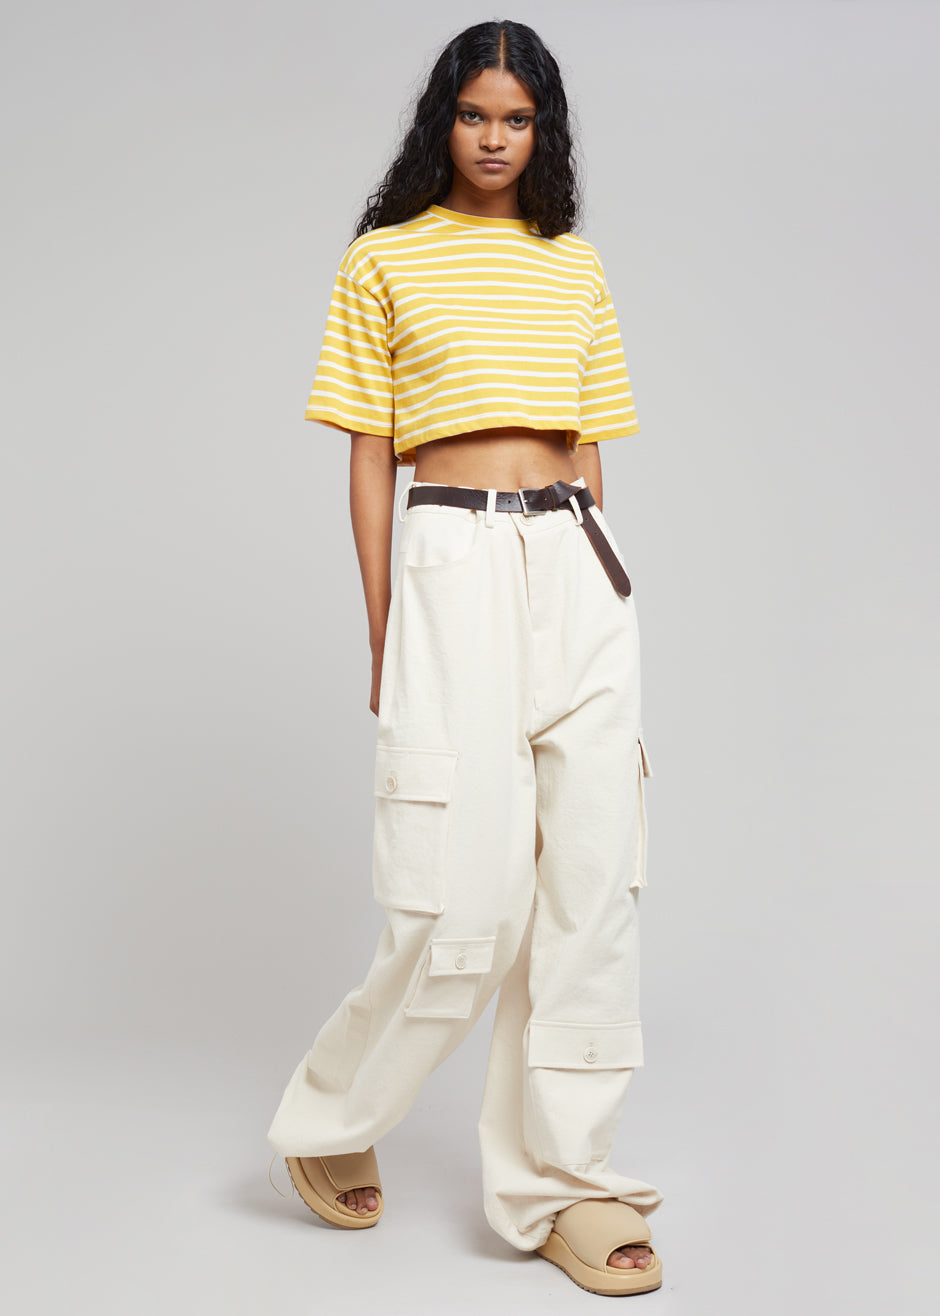 Karina Cropped T-Shirt - Yellow Gold/Off White - 4